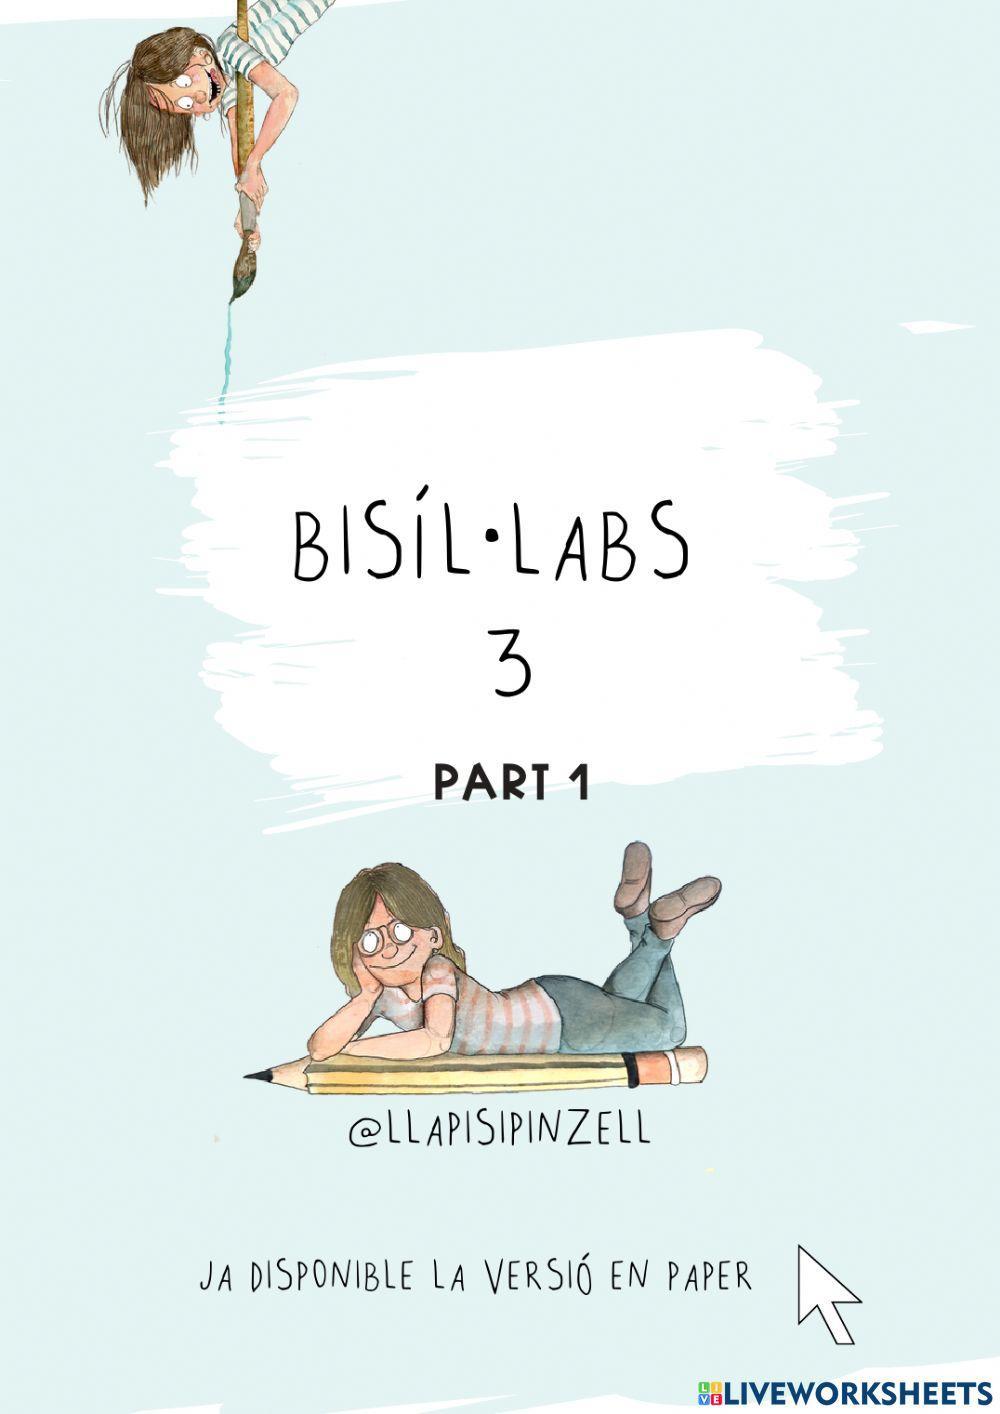 Bisíl·labs 3 part 1